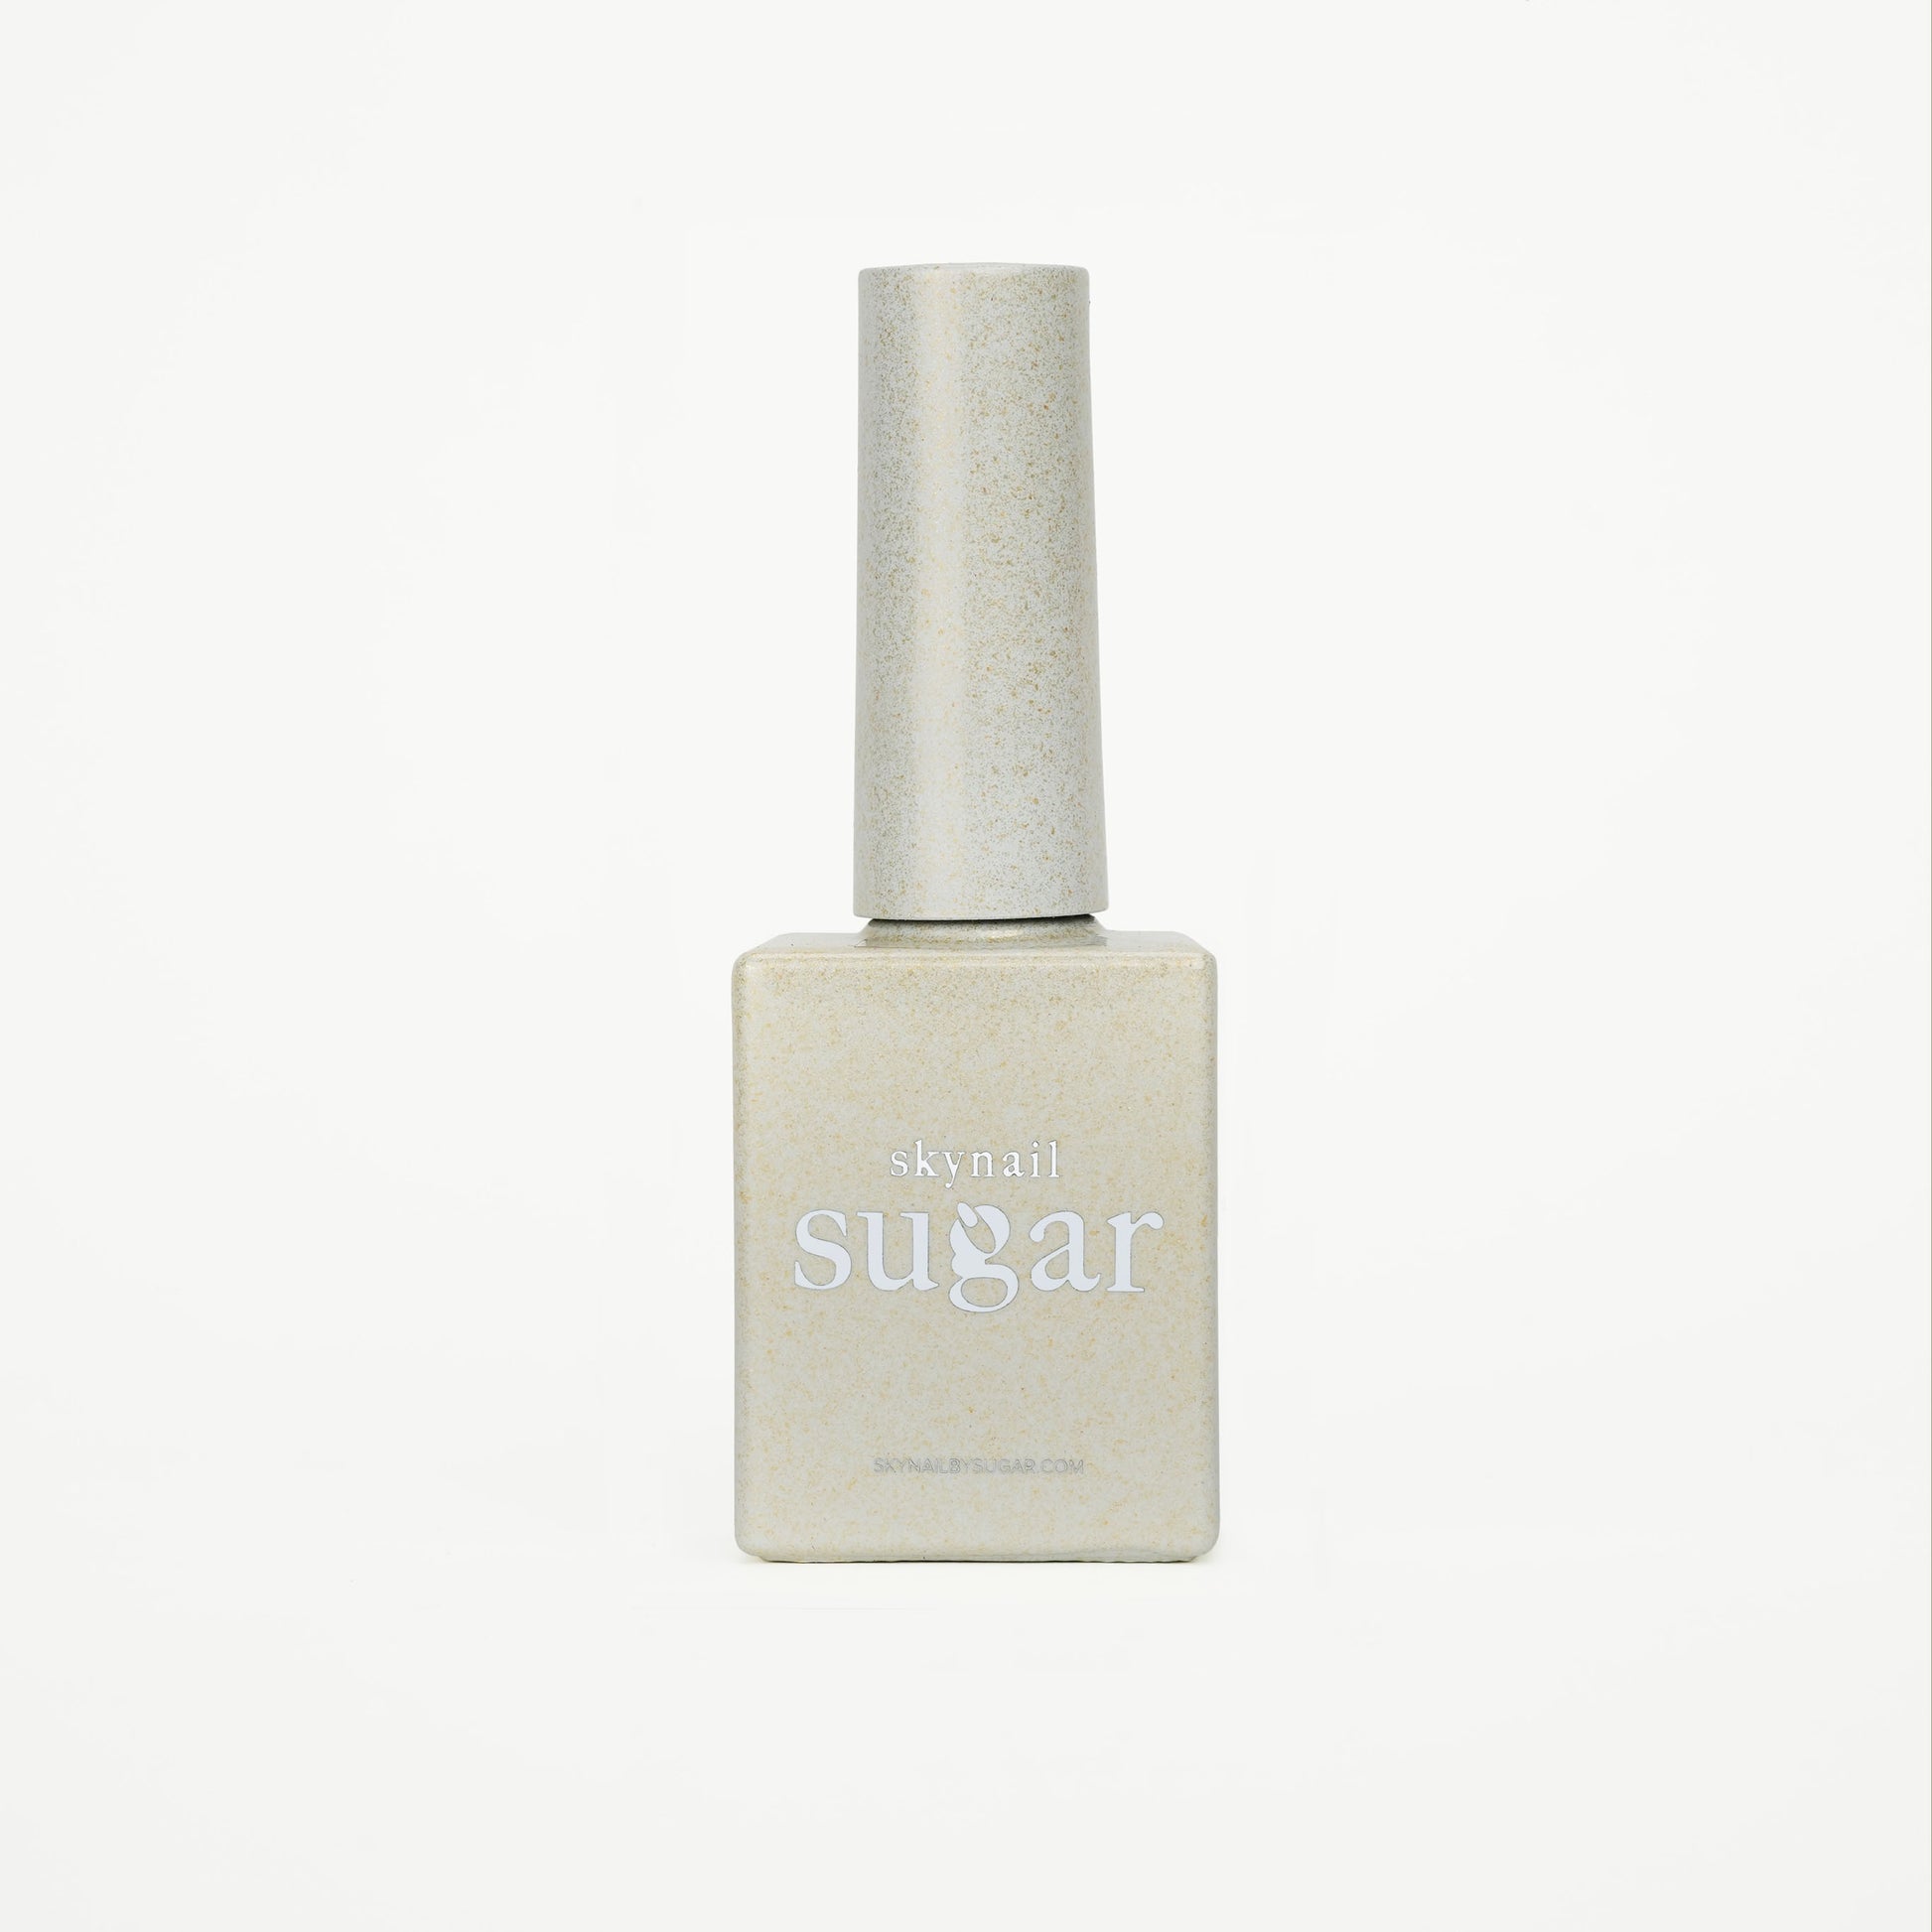 Bottle of glitter green gel nail polish from Skynailbysugar